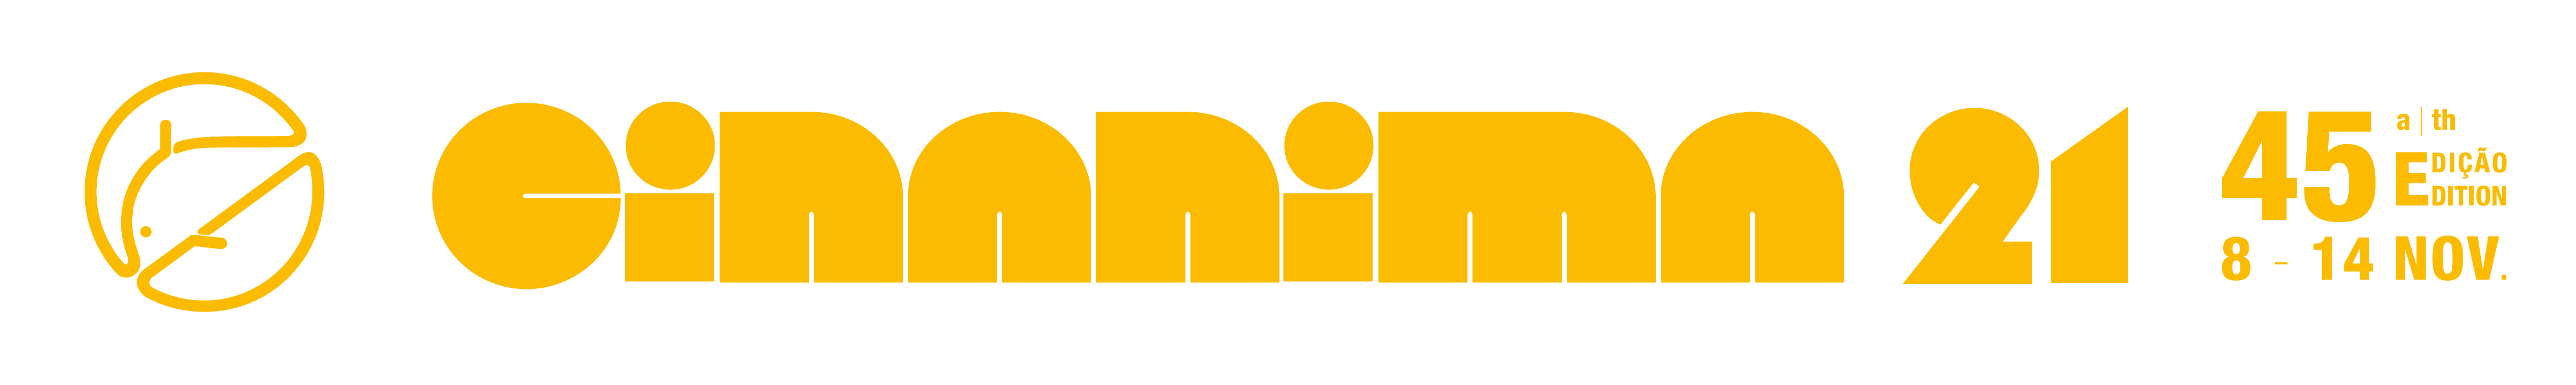 cinanima logo